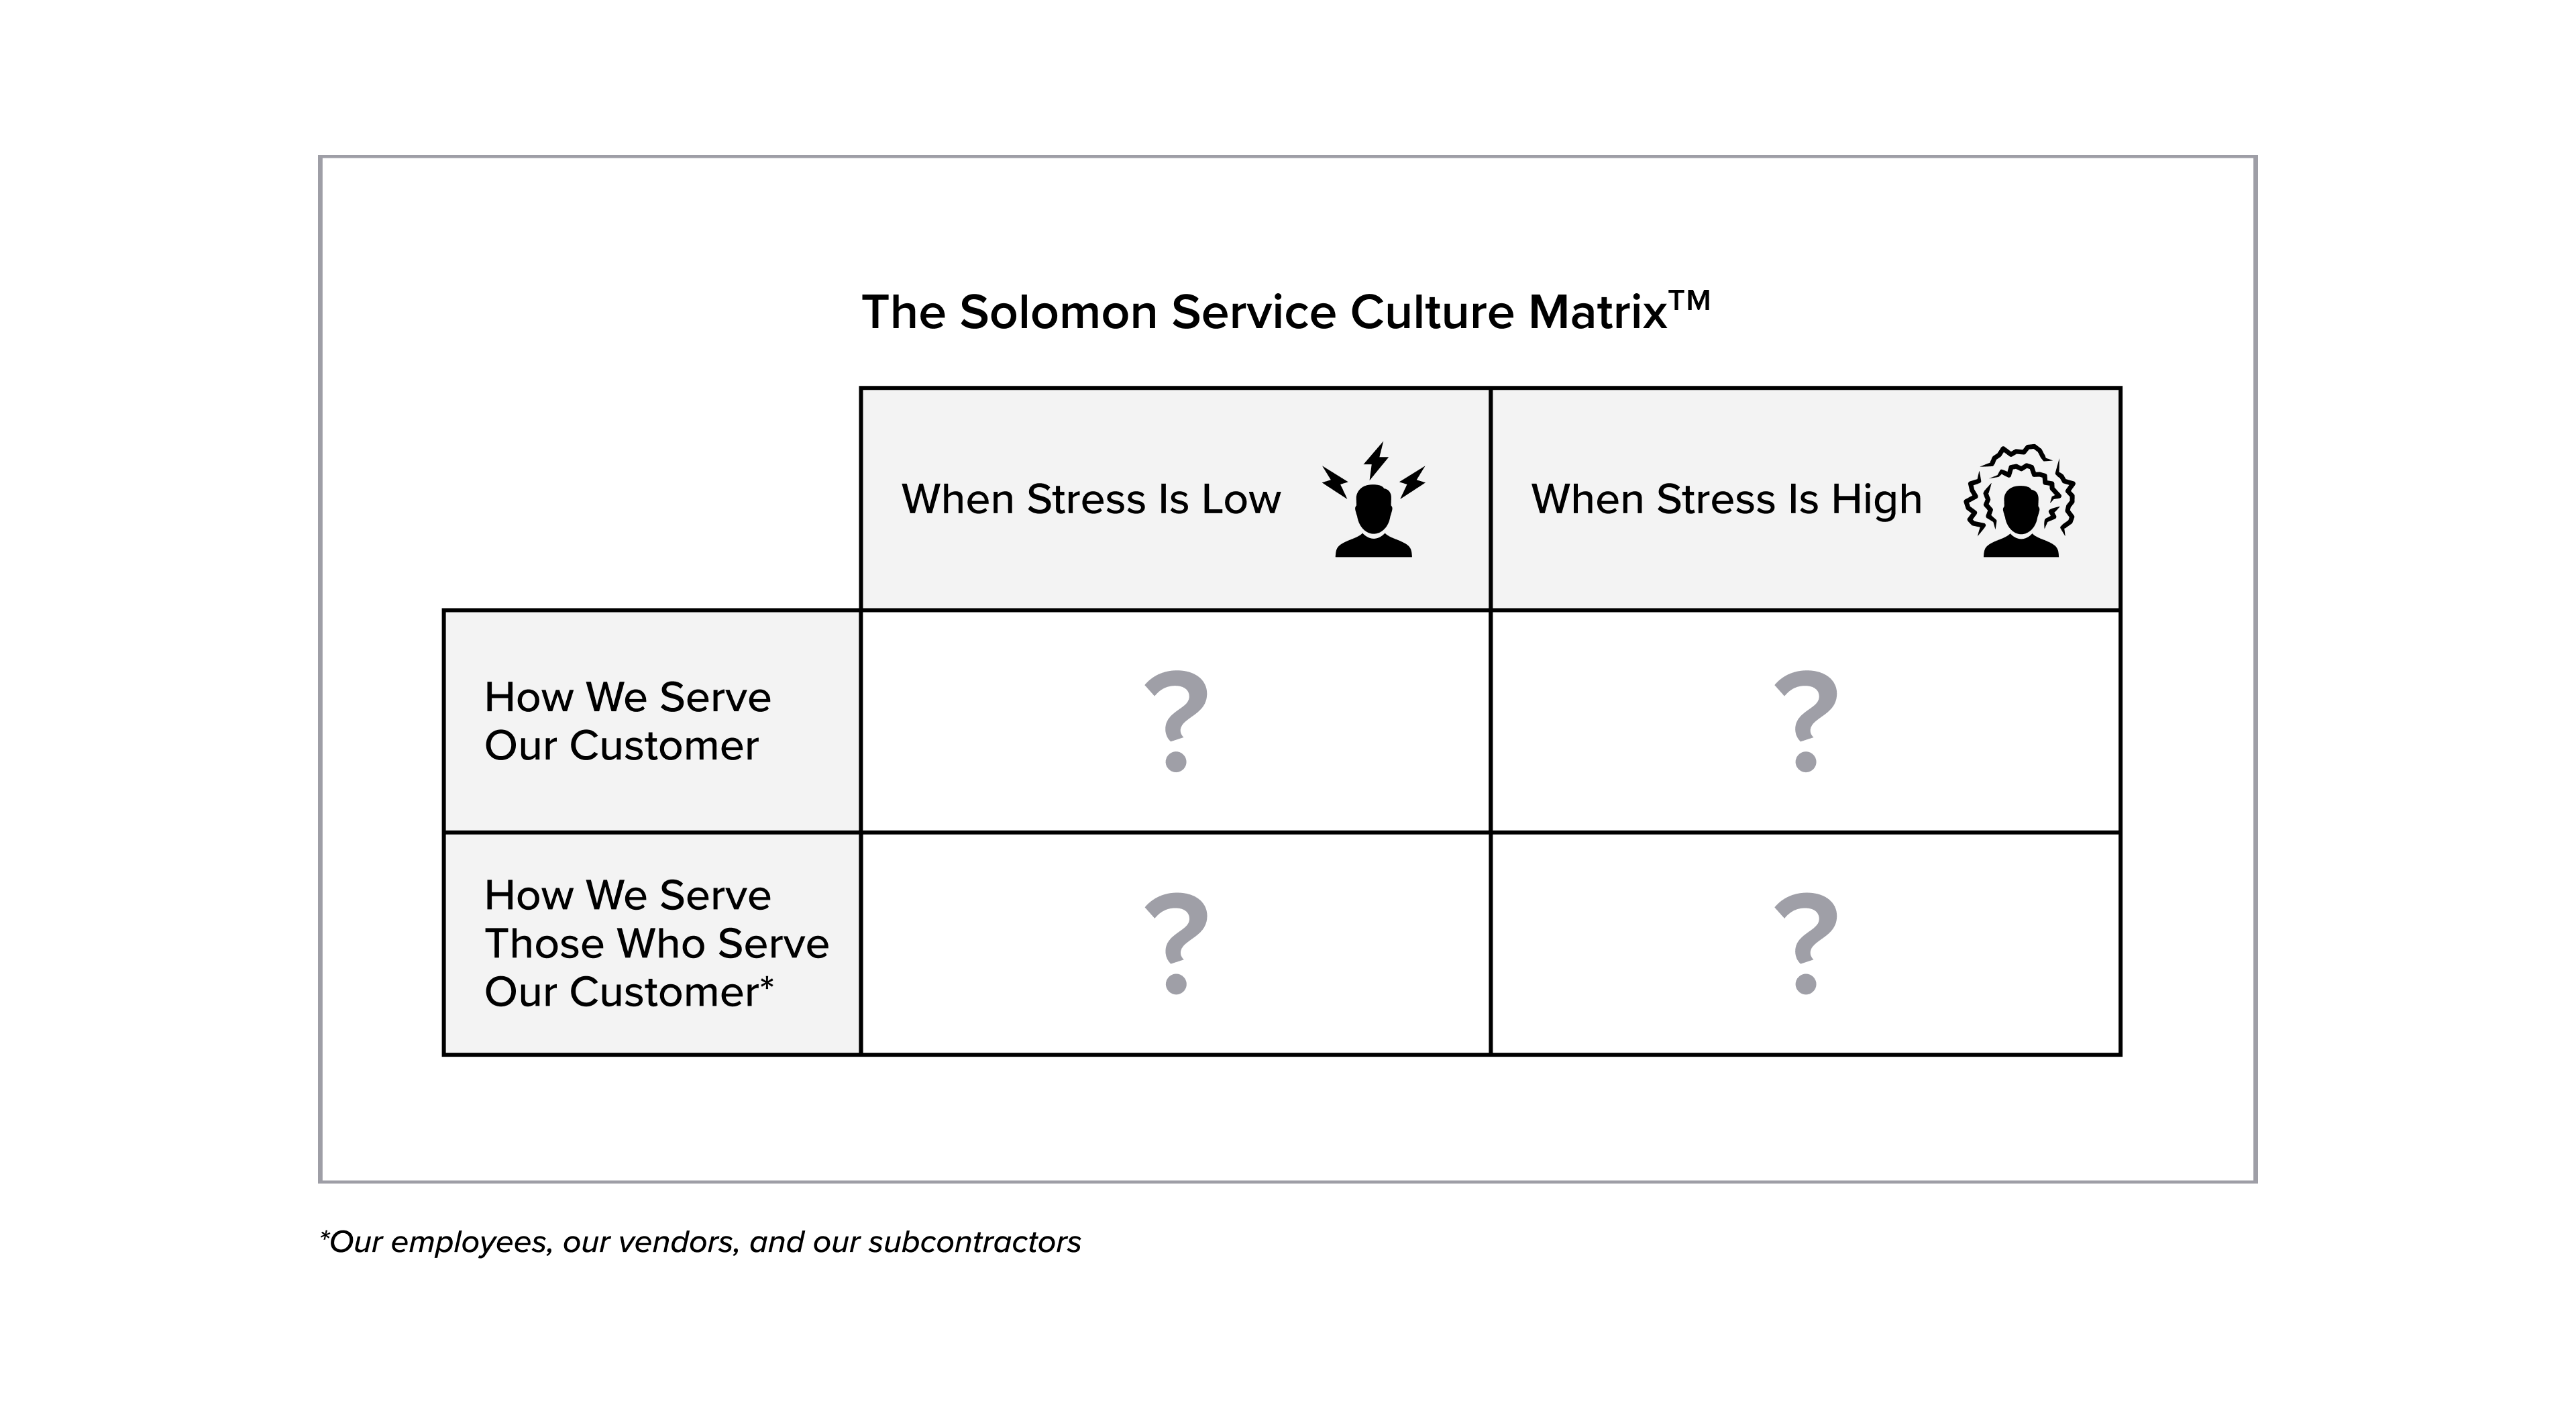 Customer Service Culture Matrix created by Micah Solomon.